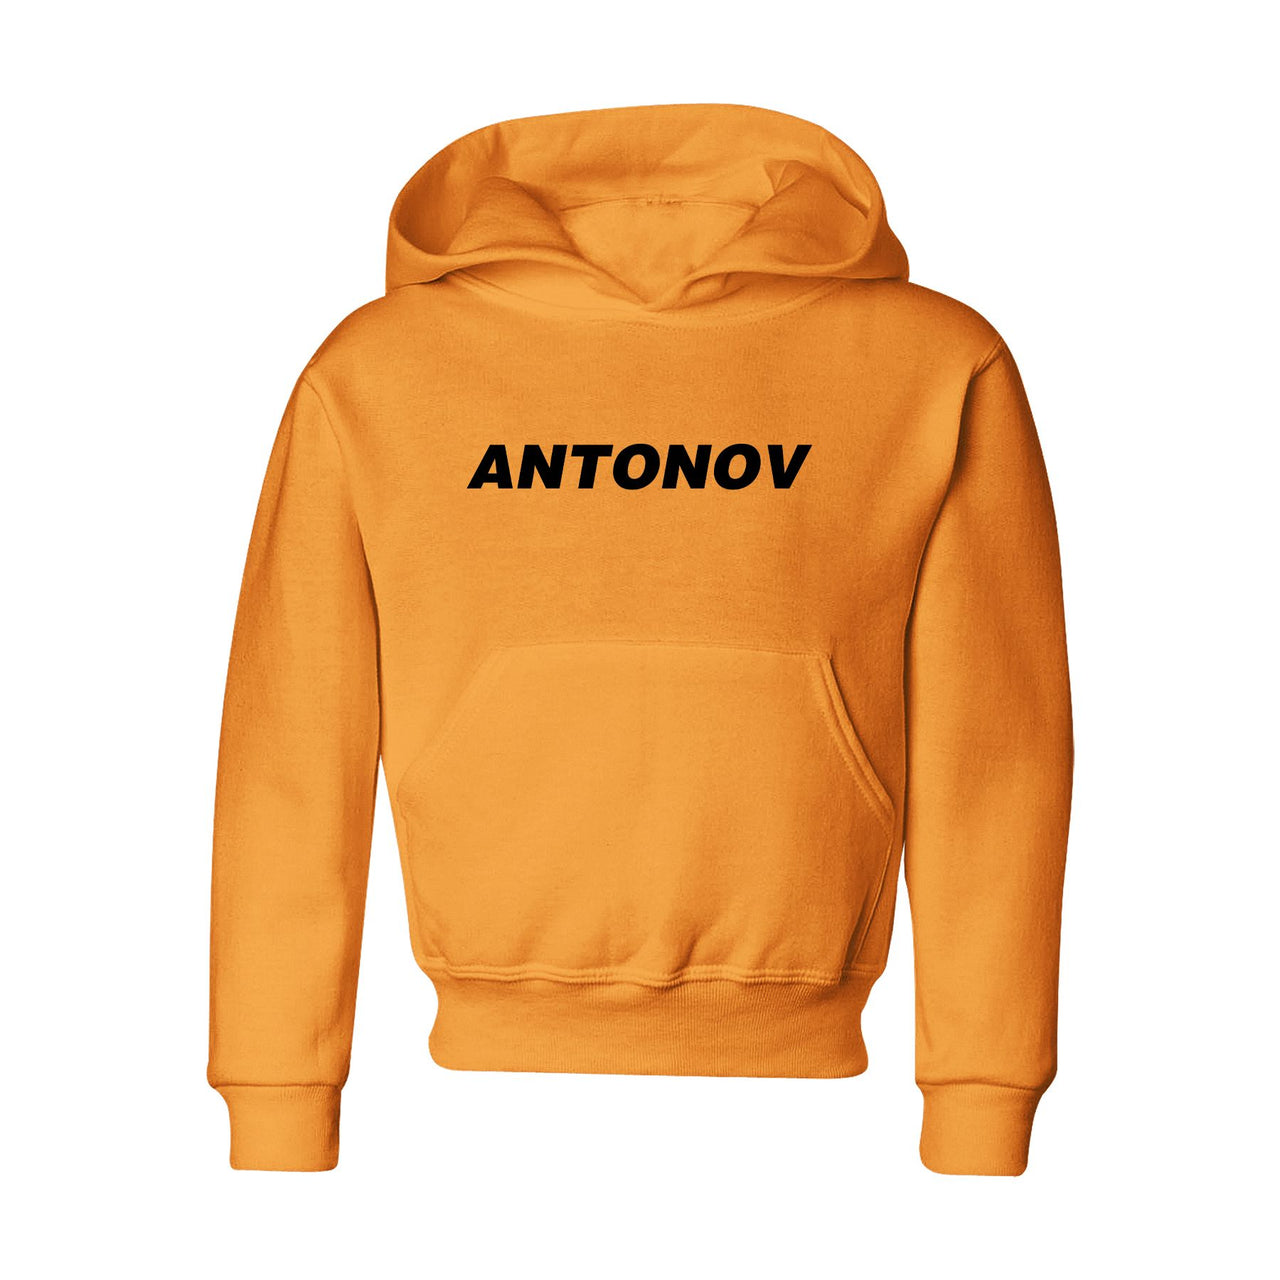 Antonov & Text Designed "CHILDREN" Hoodies